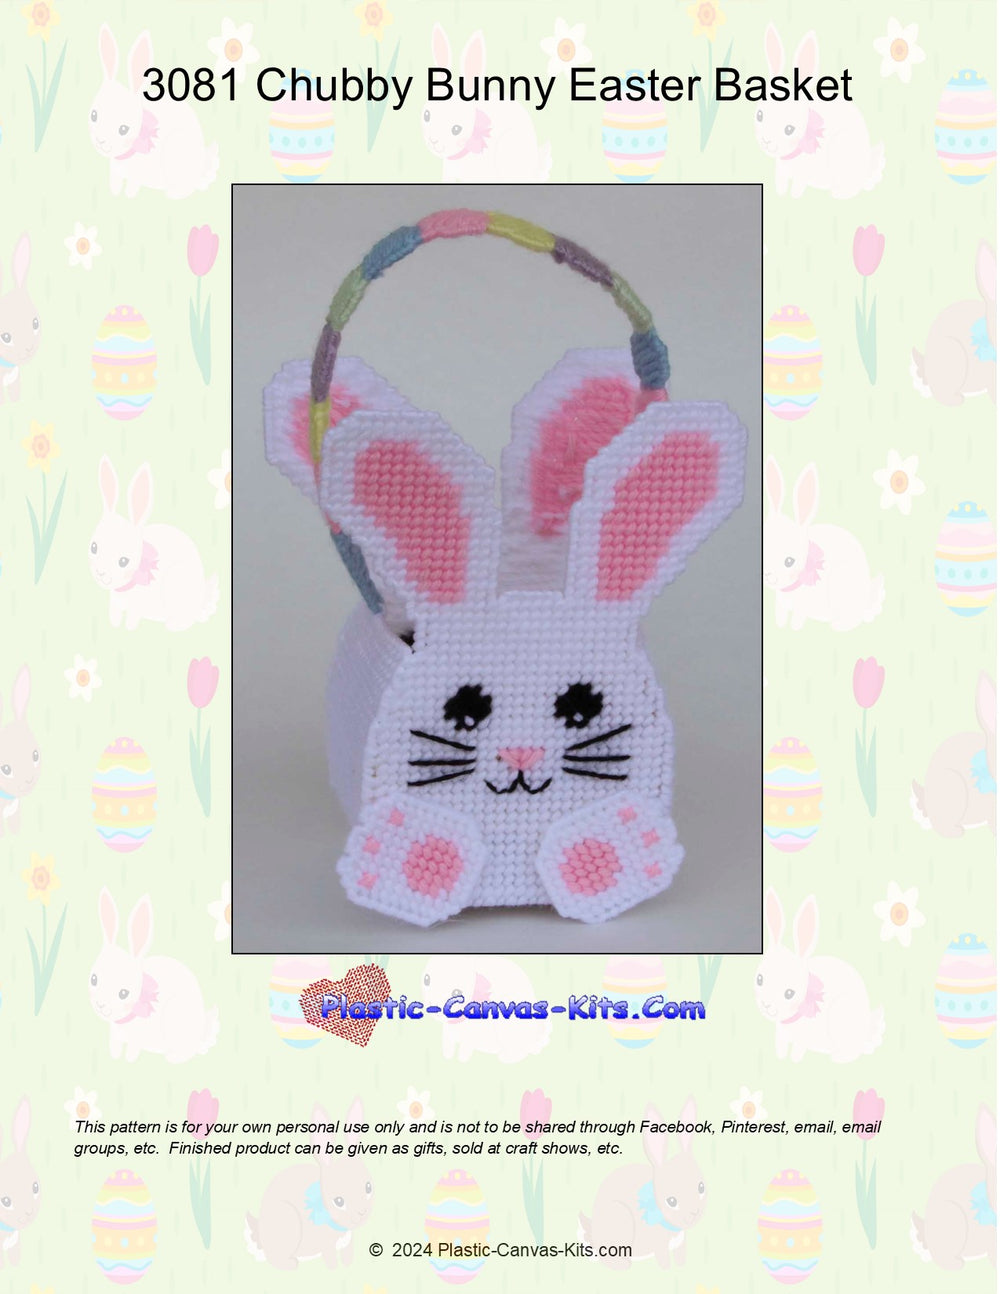 Chubby Bunny Easter Basket